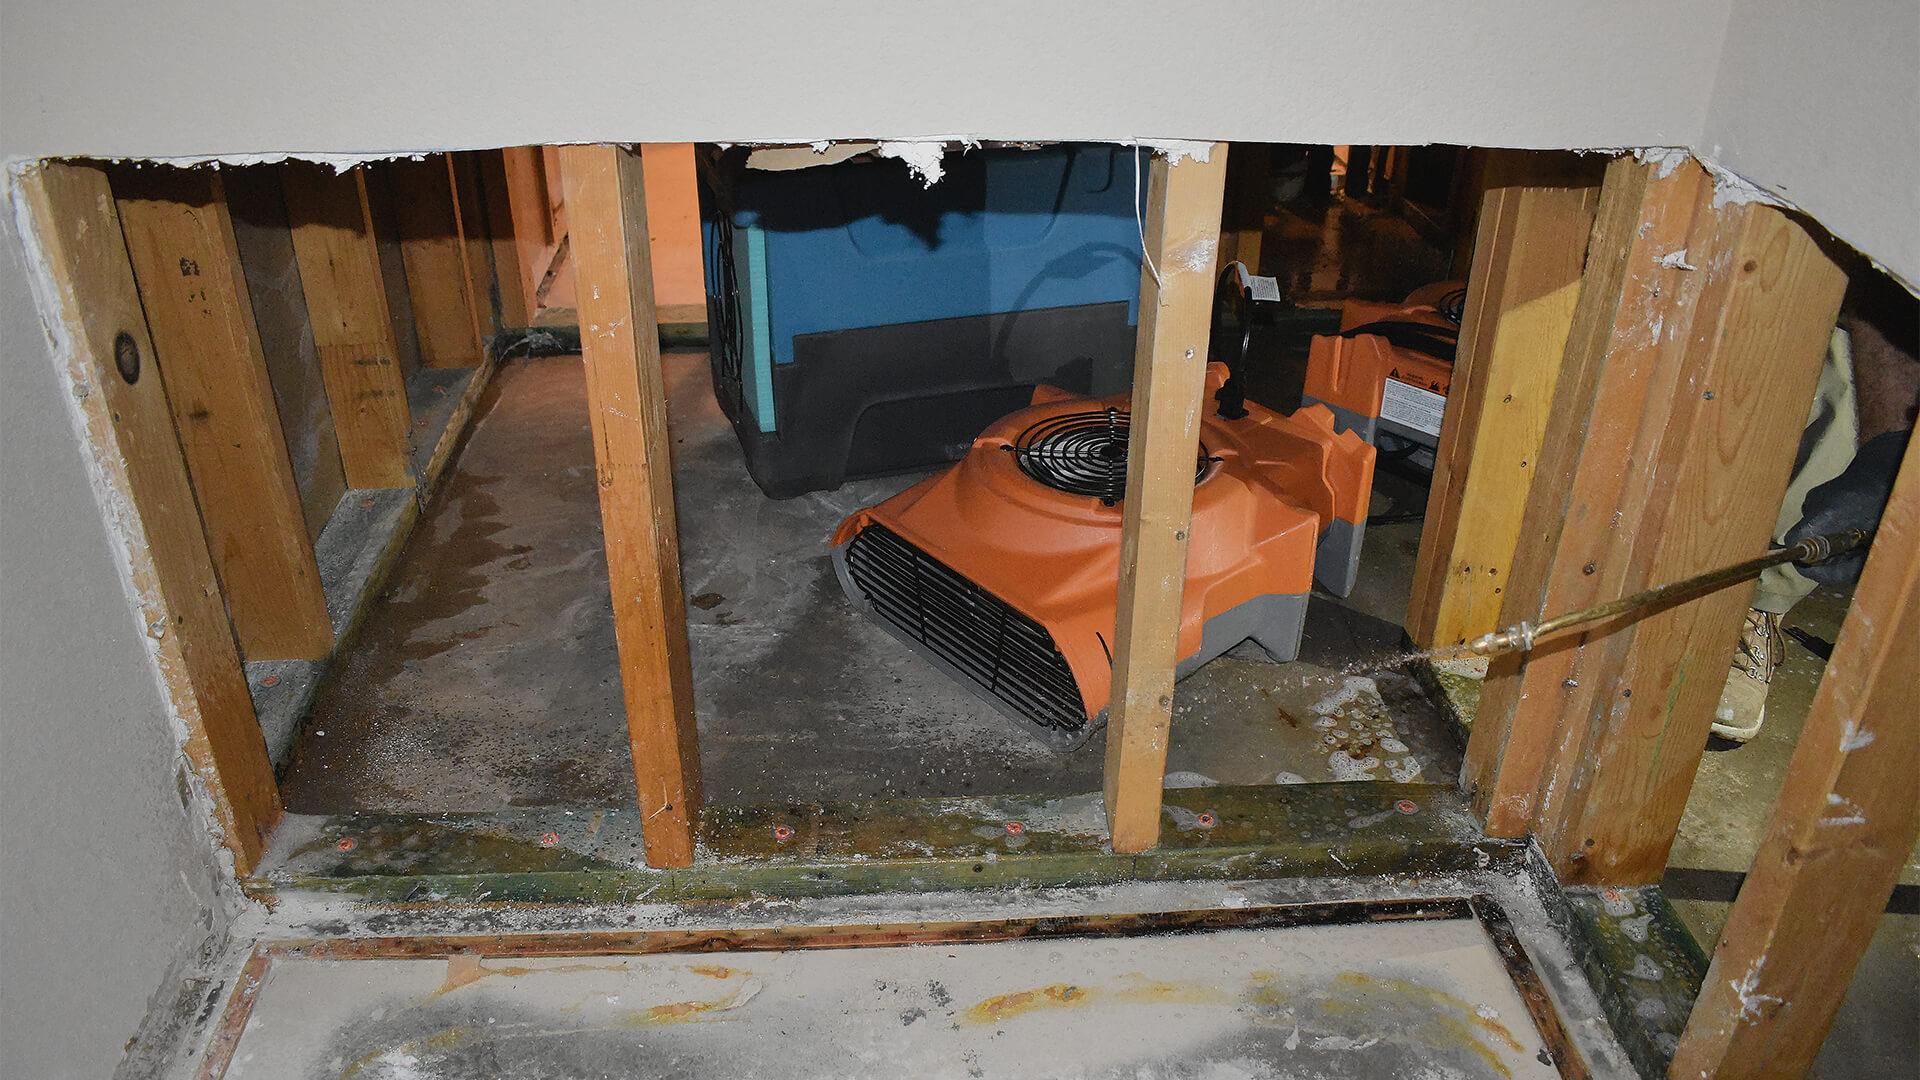 Stafford Water Damage Restoration, Home Remodeling Contractor and Kitchen Remodeling Contractor